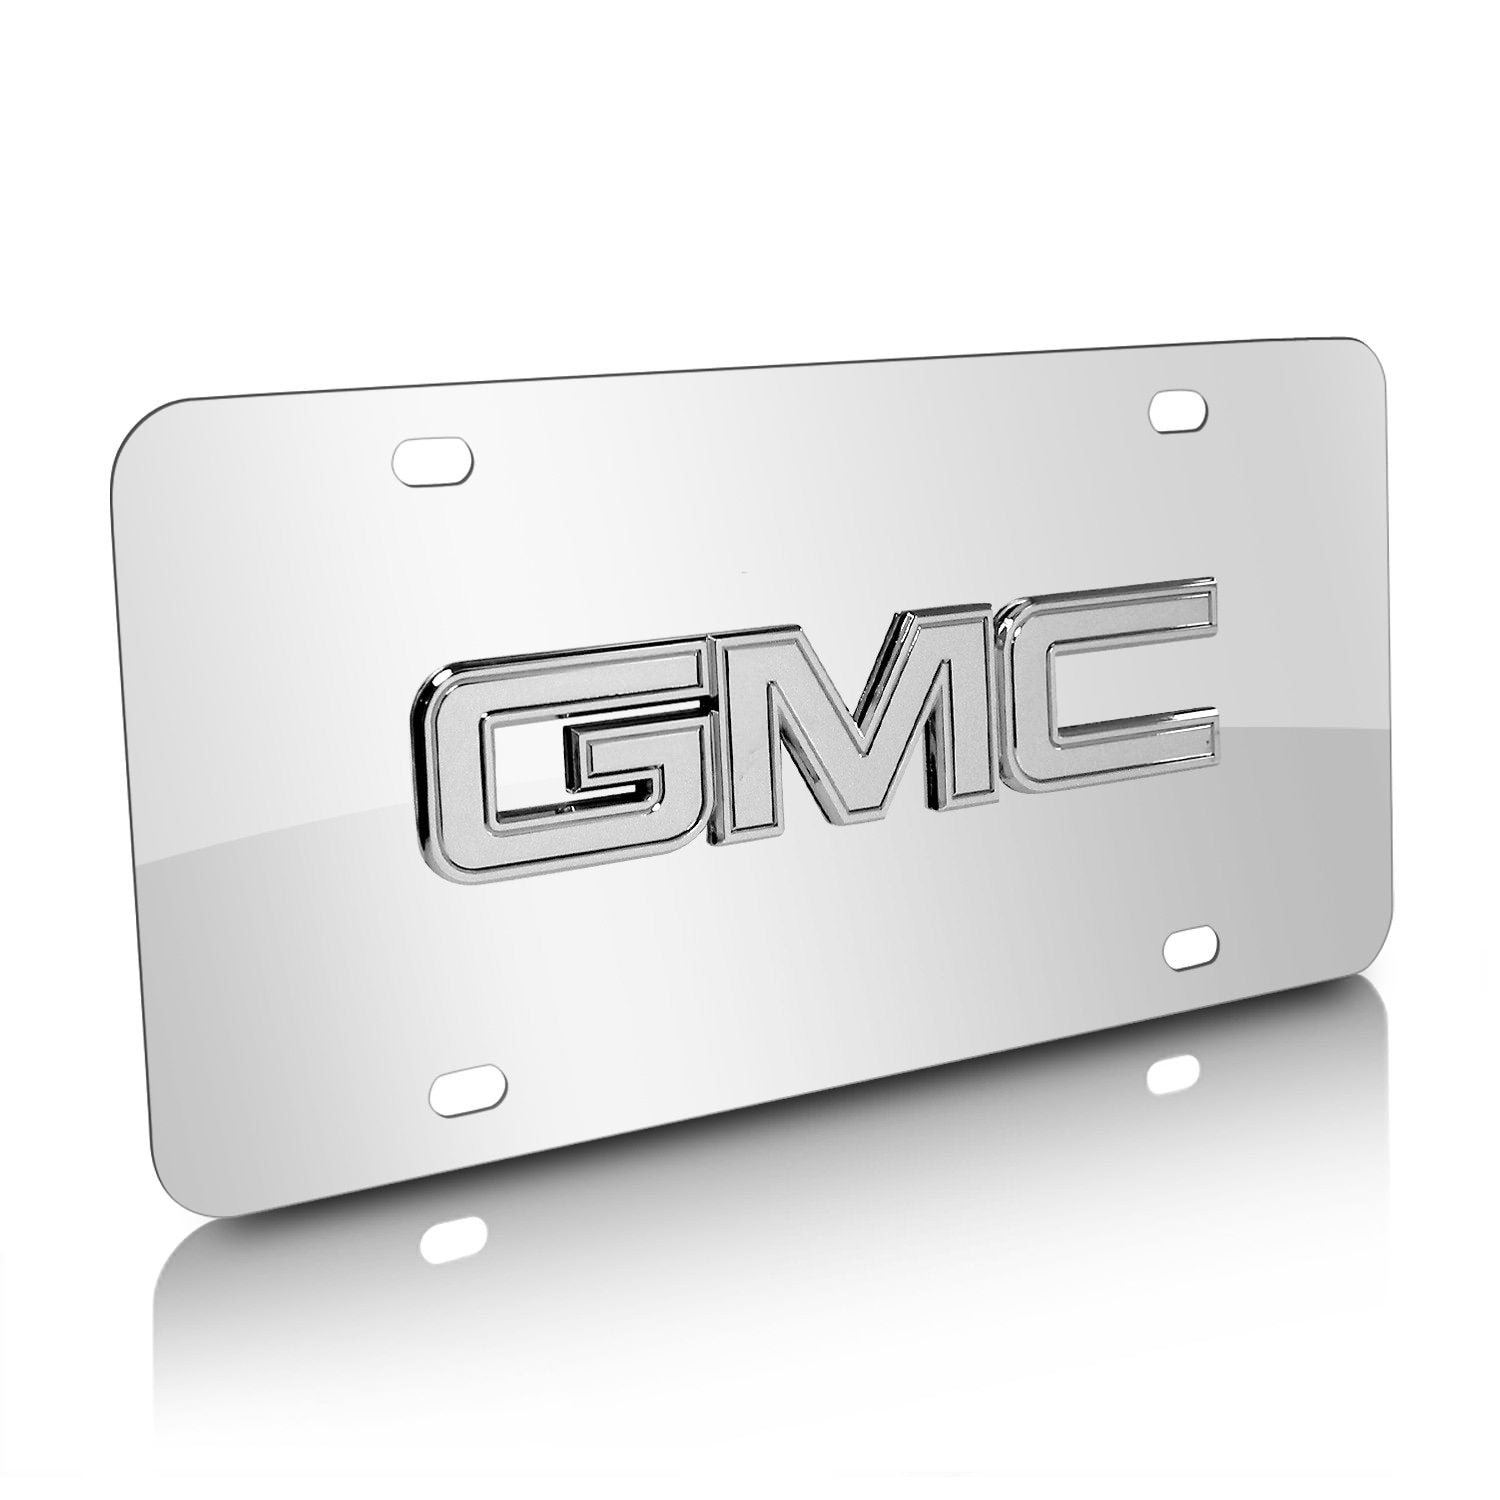 GMC License Plate